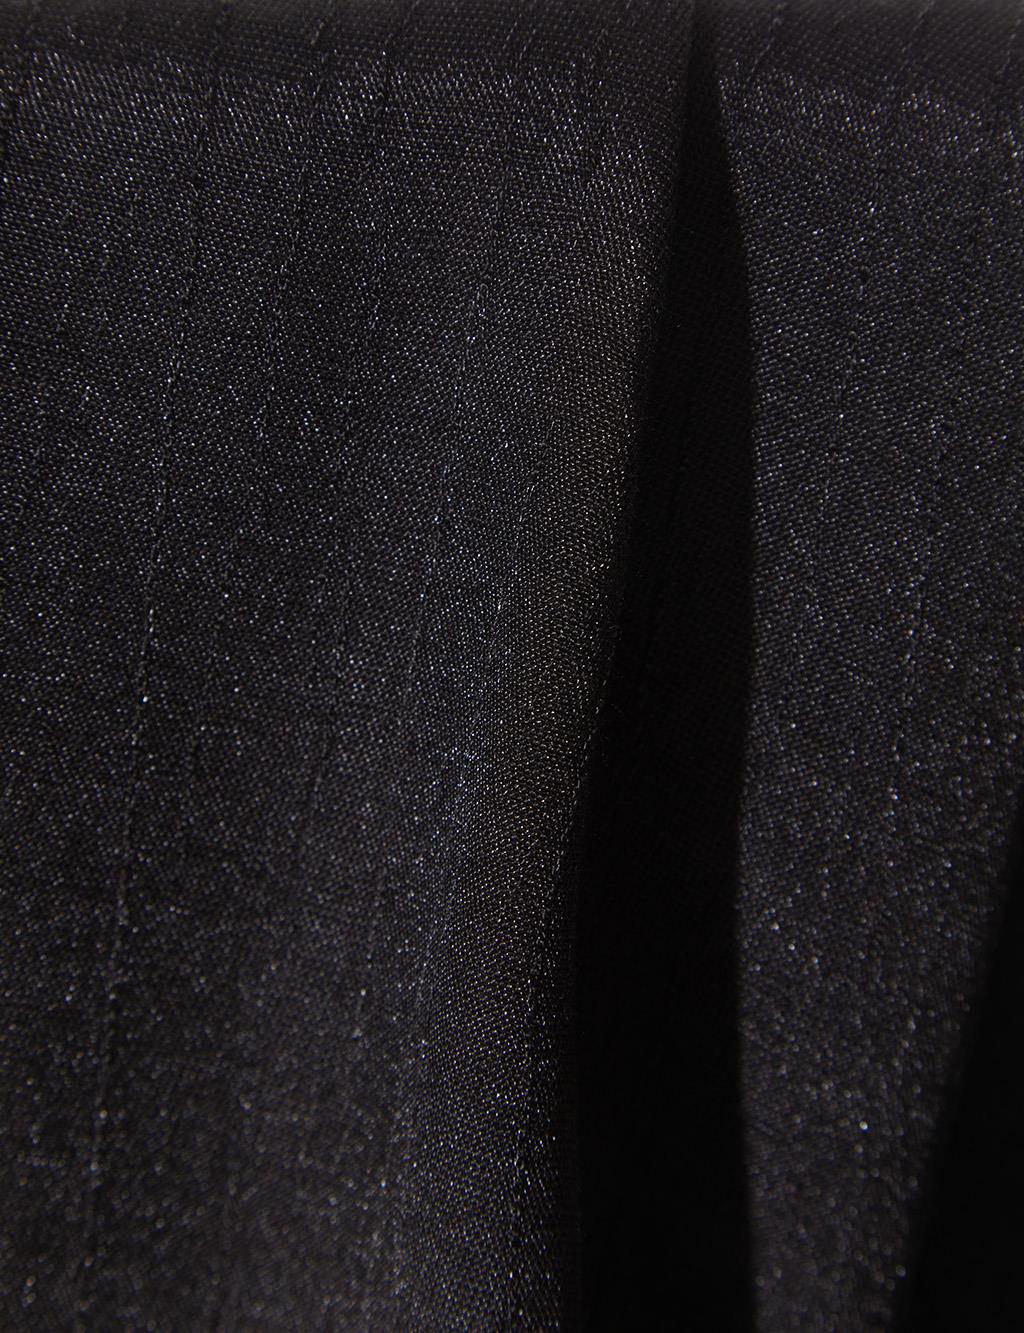 Solid Color Janjan Silk Shawl Black